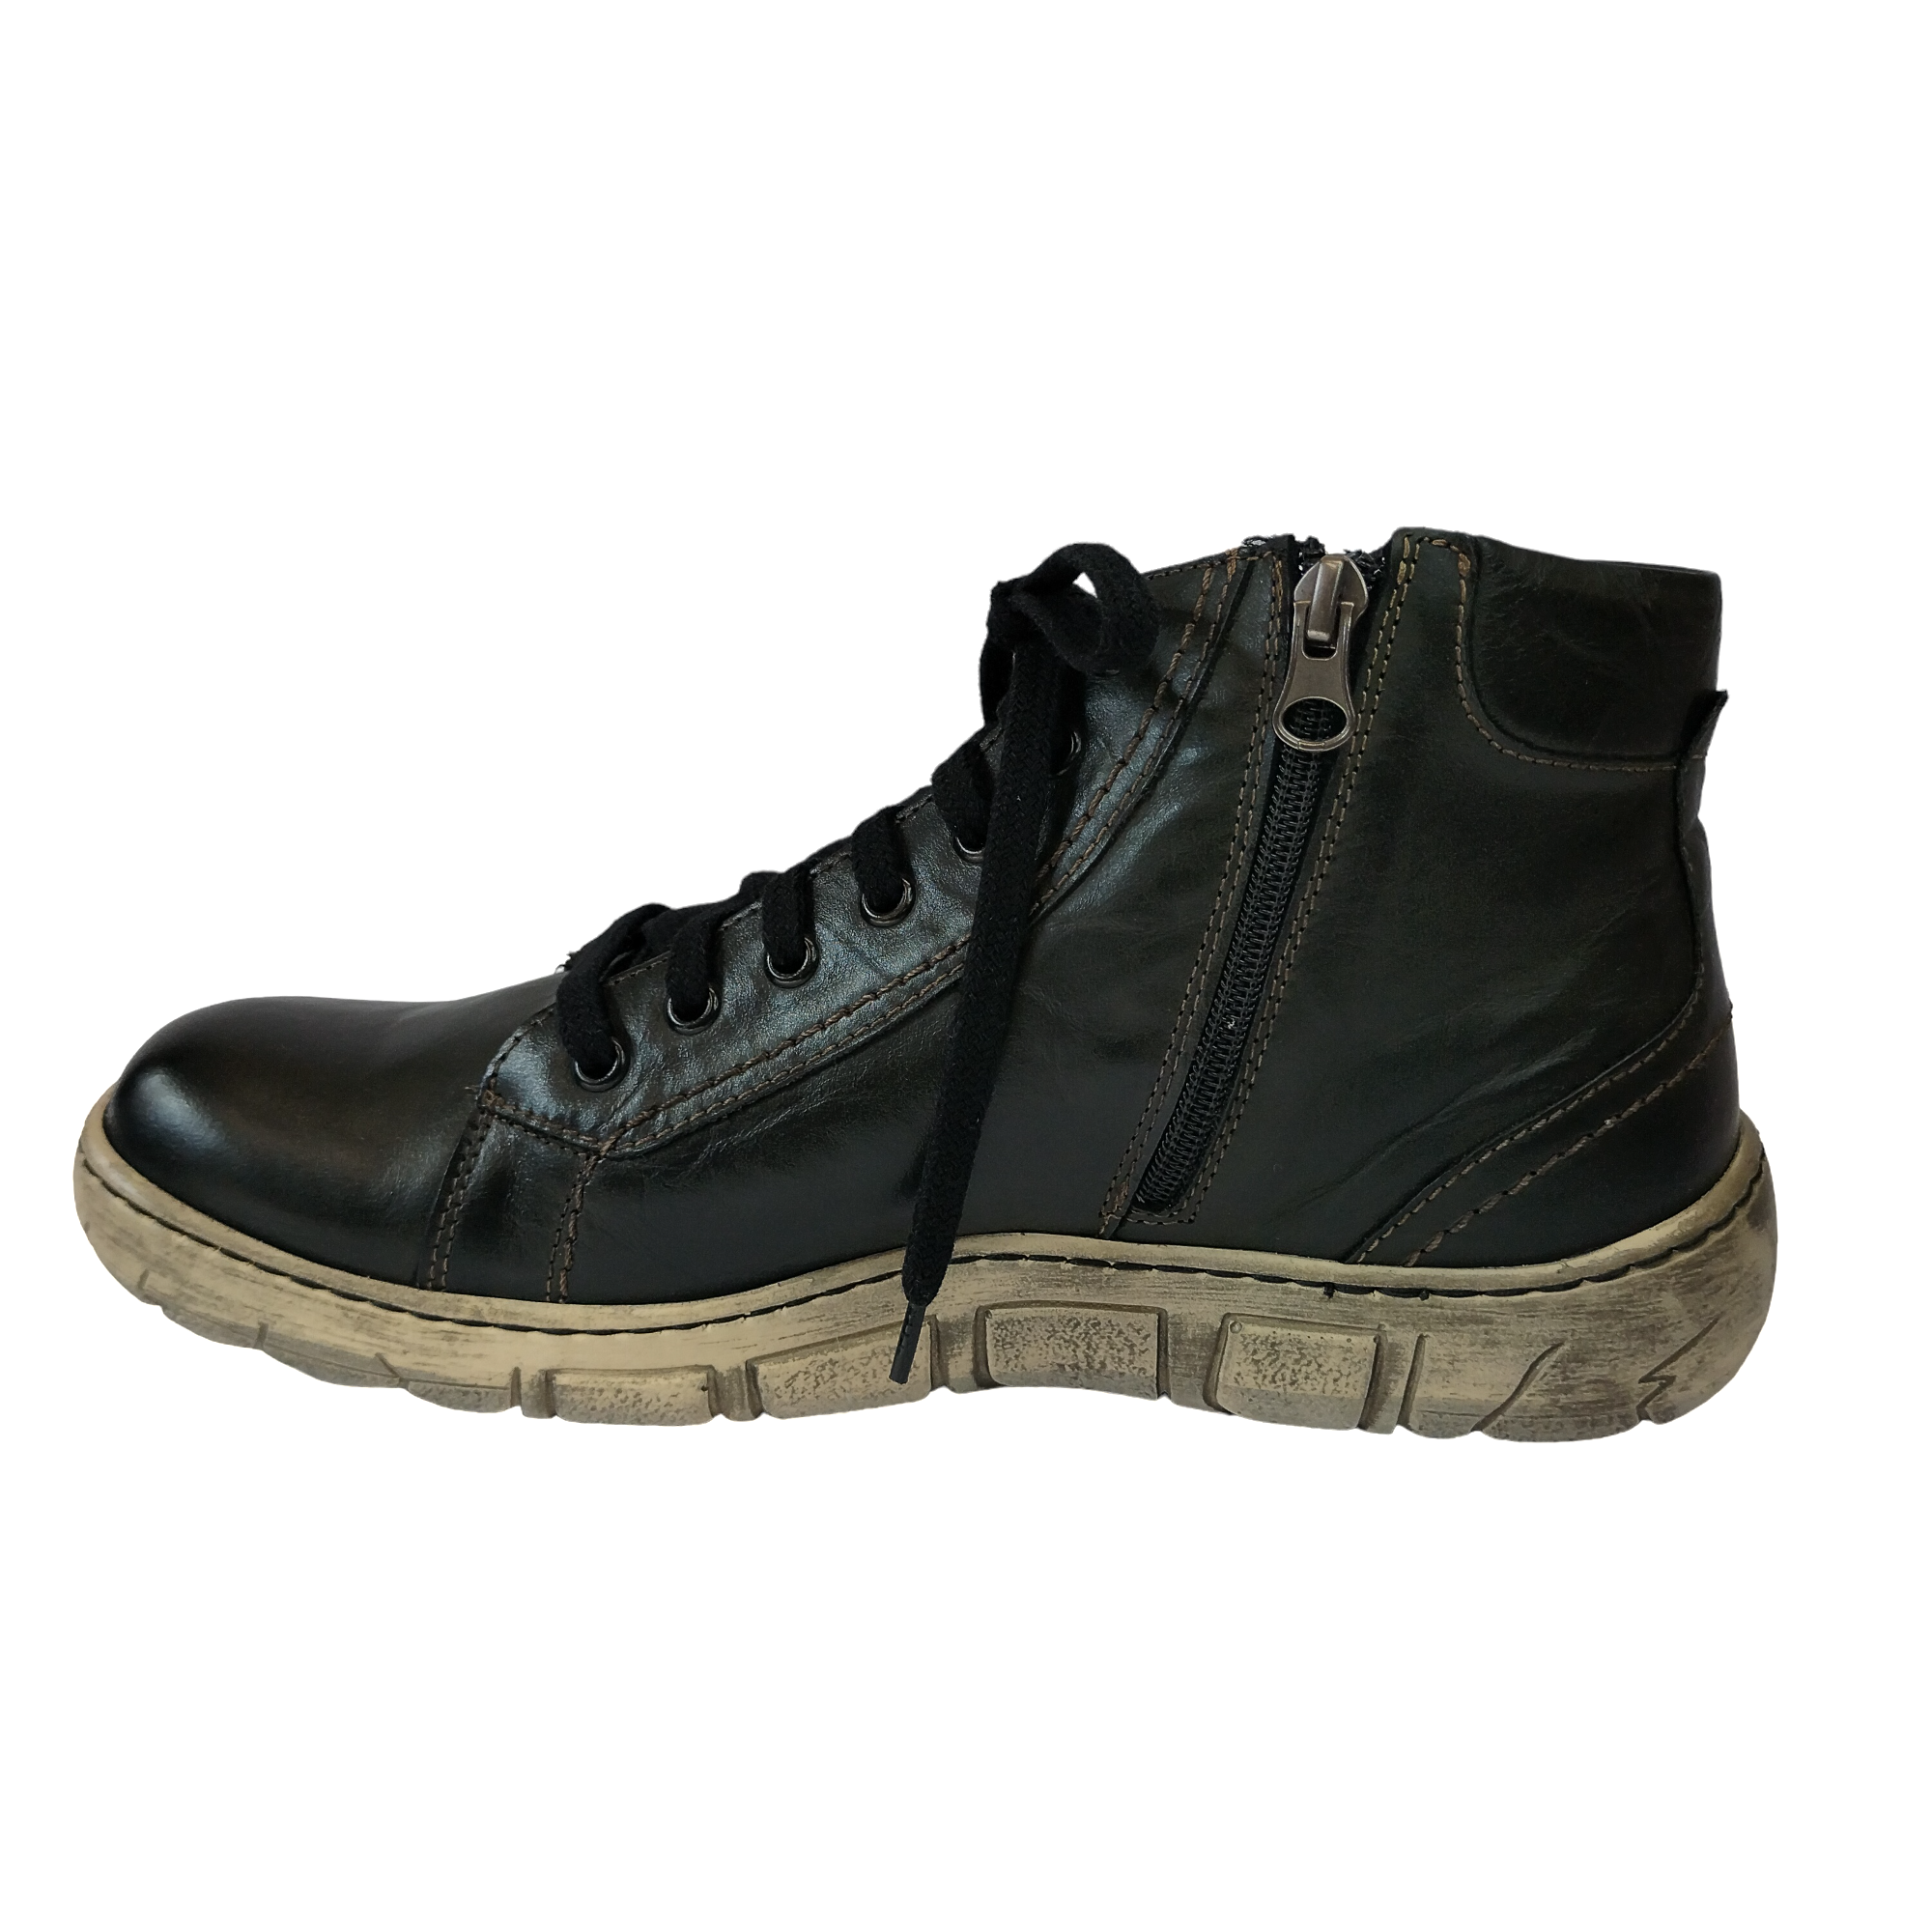 Kacper 3-1288 M - shoe&me - Kacper - Boot - Boots, Mens, Winter